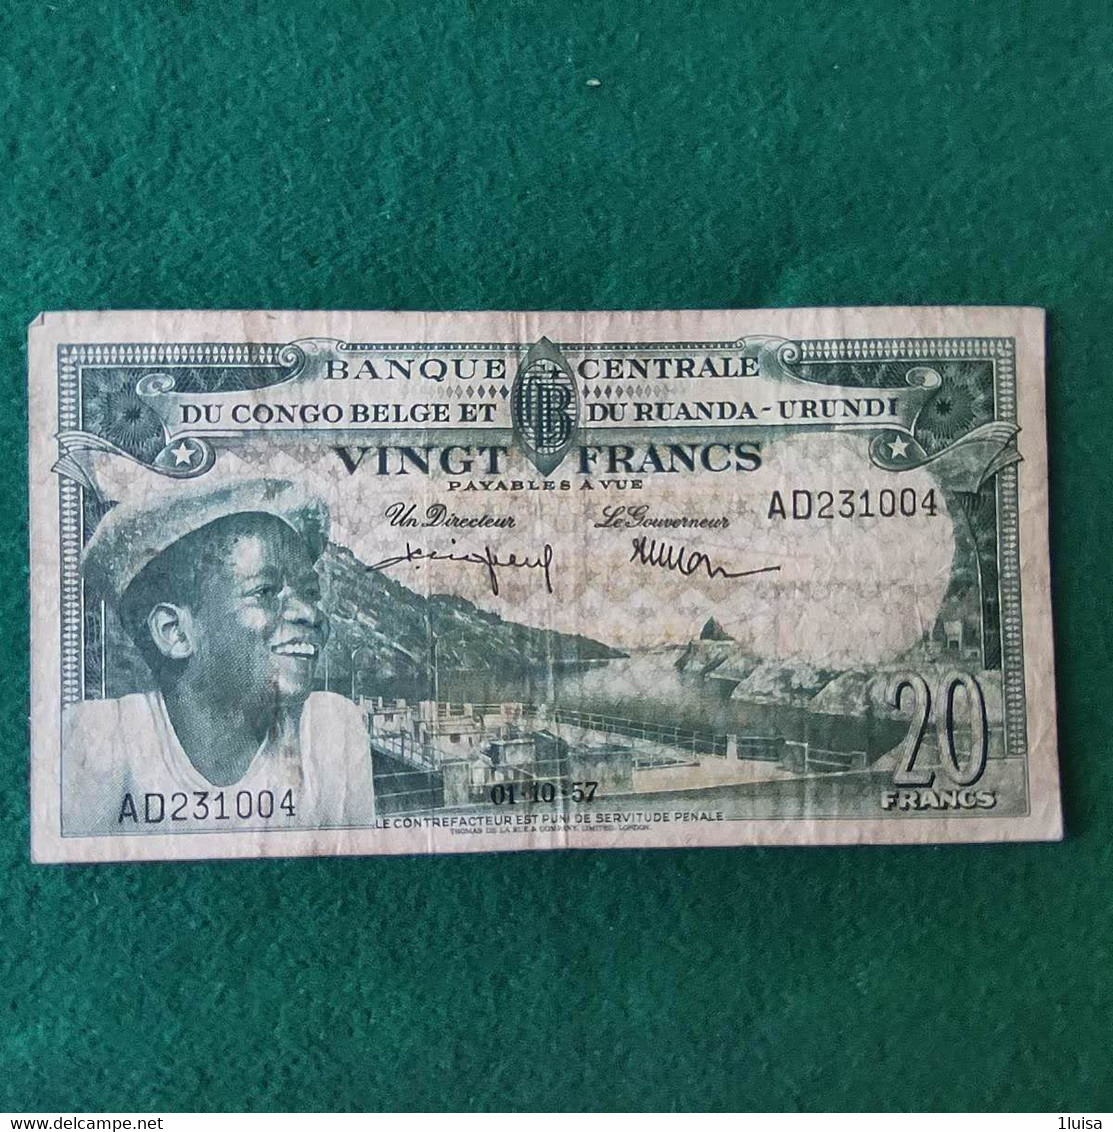 CONGO BELGA 20 FRANCS 1957 - Belgian Congo Bank